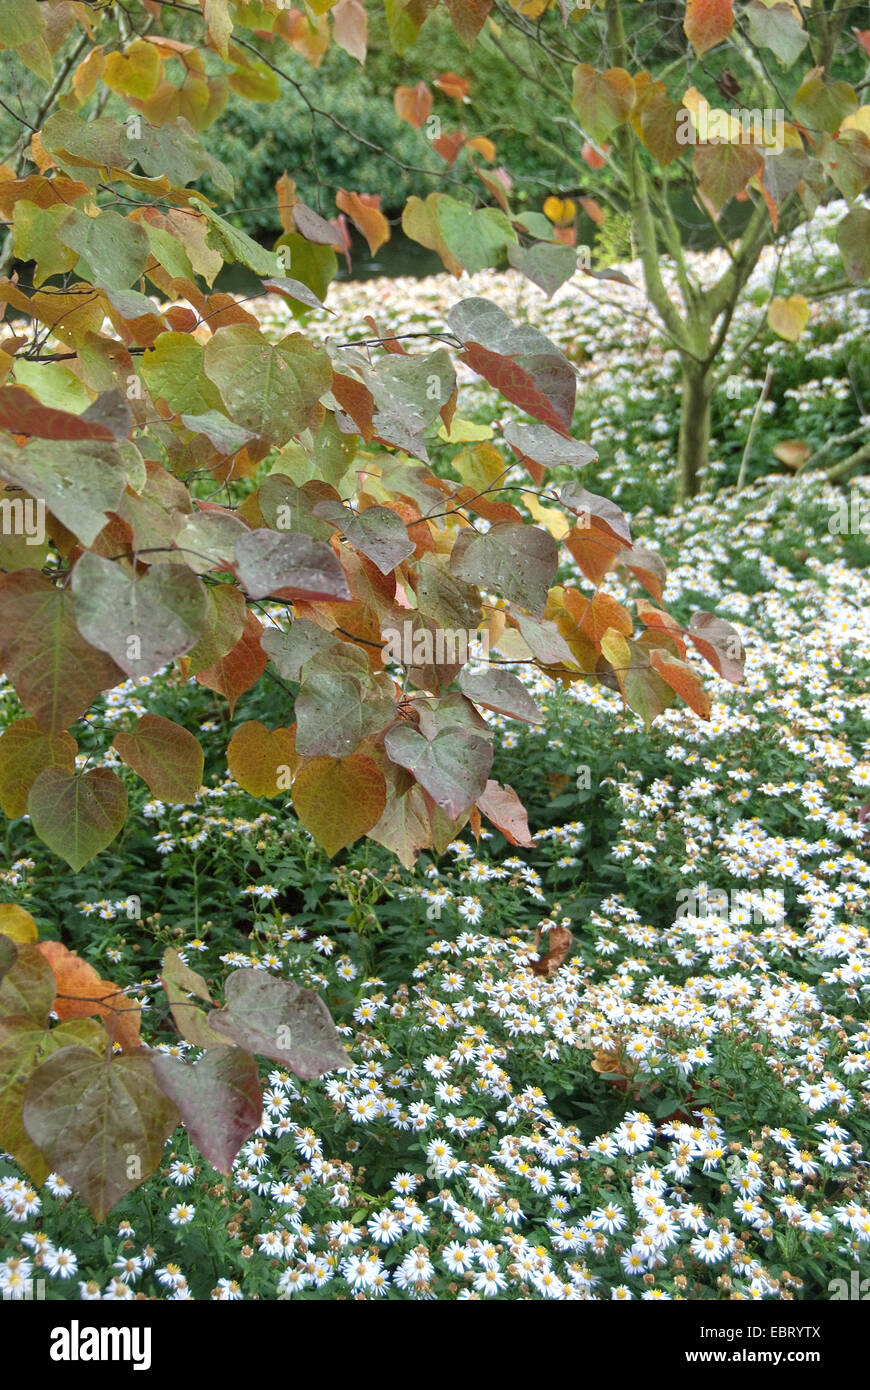 Nordamerika rote Knospe (Cercis Canadensis 'Forest Pansy', Cercis Canadensis Forest Pansy), Sorte Forest Pansy, im Herbst Stockfoto